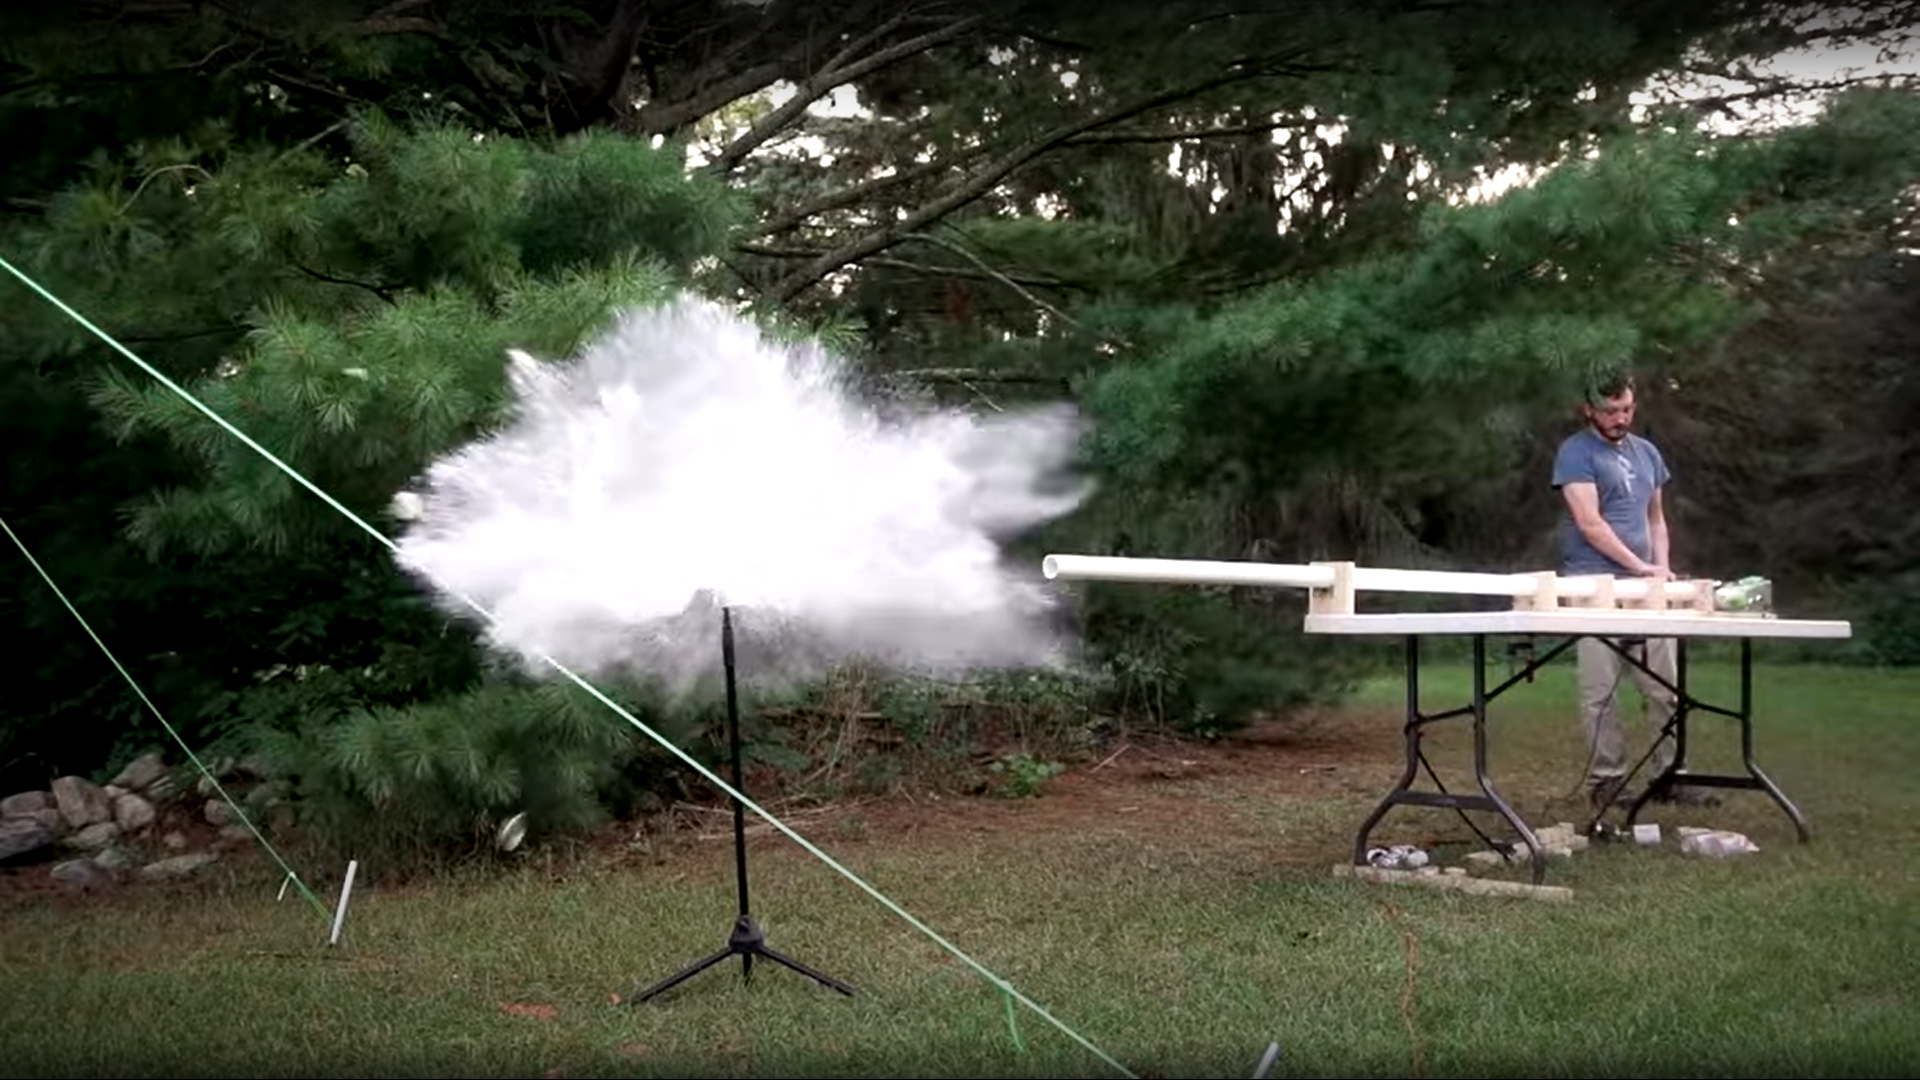 Rapid-Reload Vacuum Cannon Totally Demolishes Those Veggies